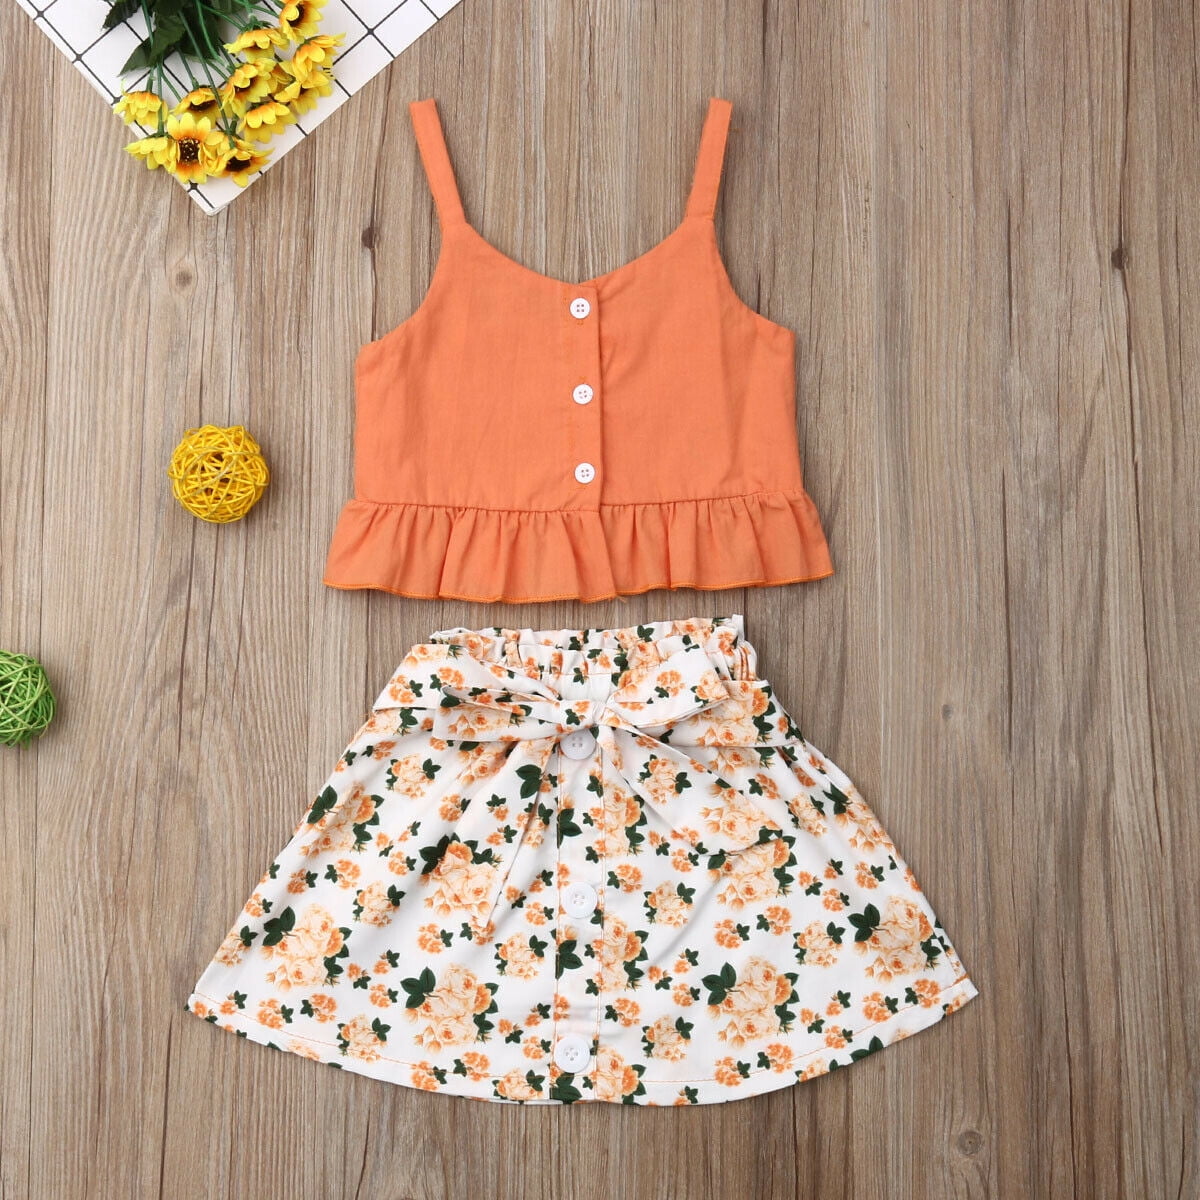 Floral Skirt Set Kids Clothes Outfits New!2pcs Baby Girls Dress Yellow T-shirt 